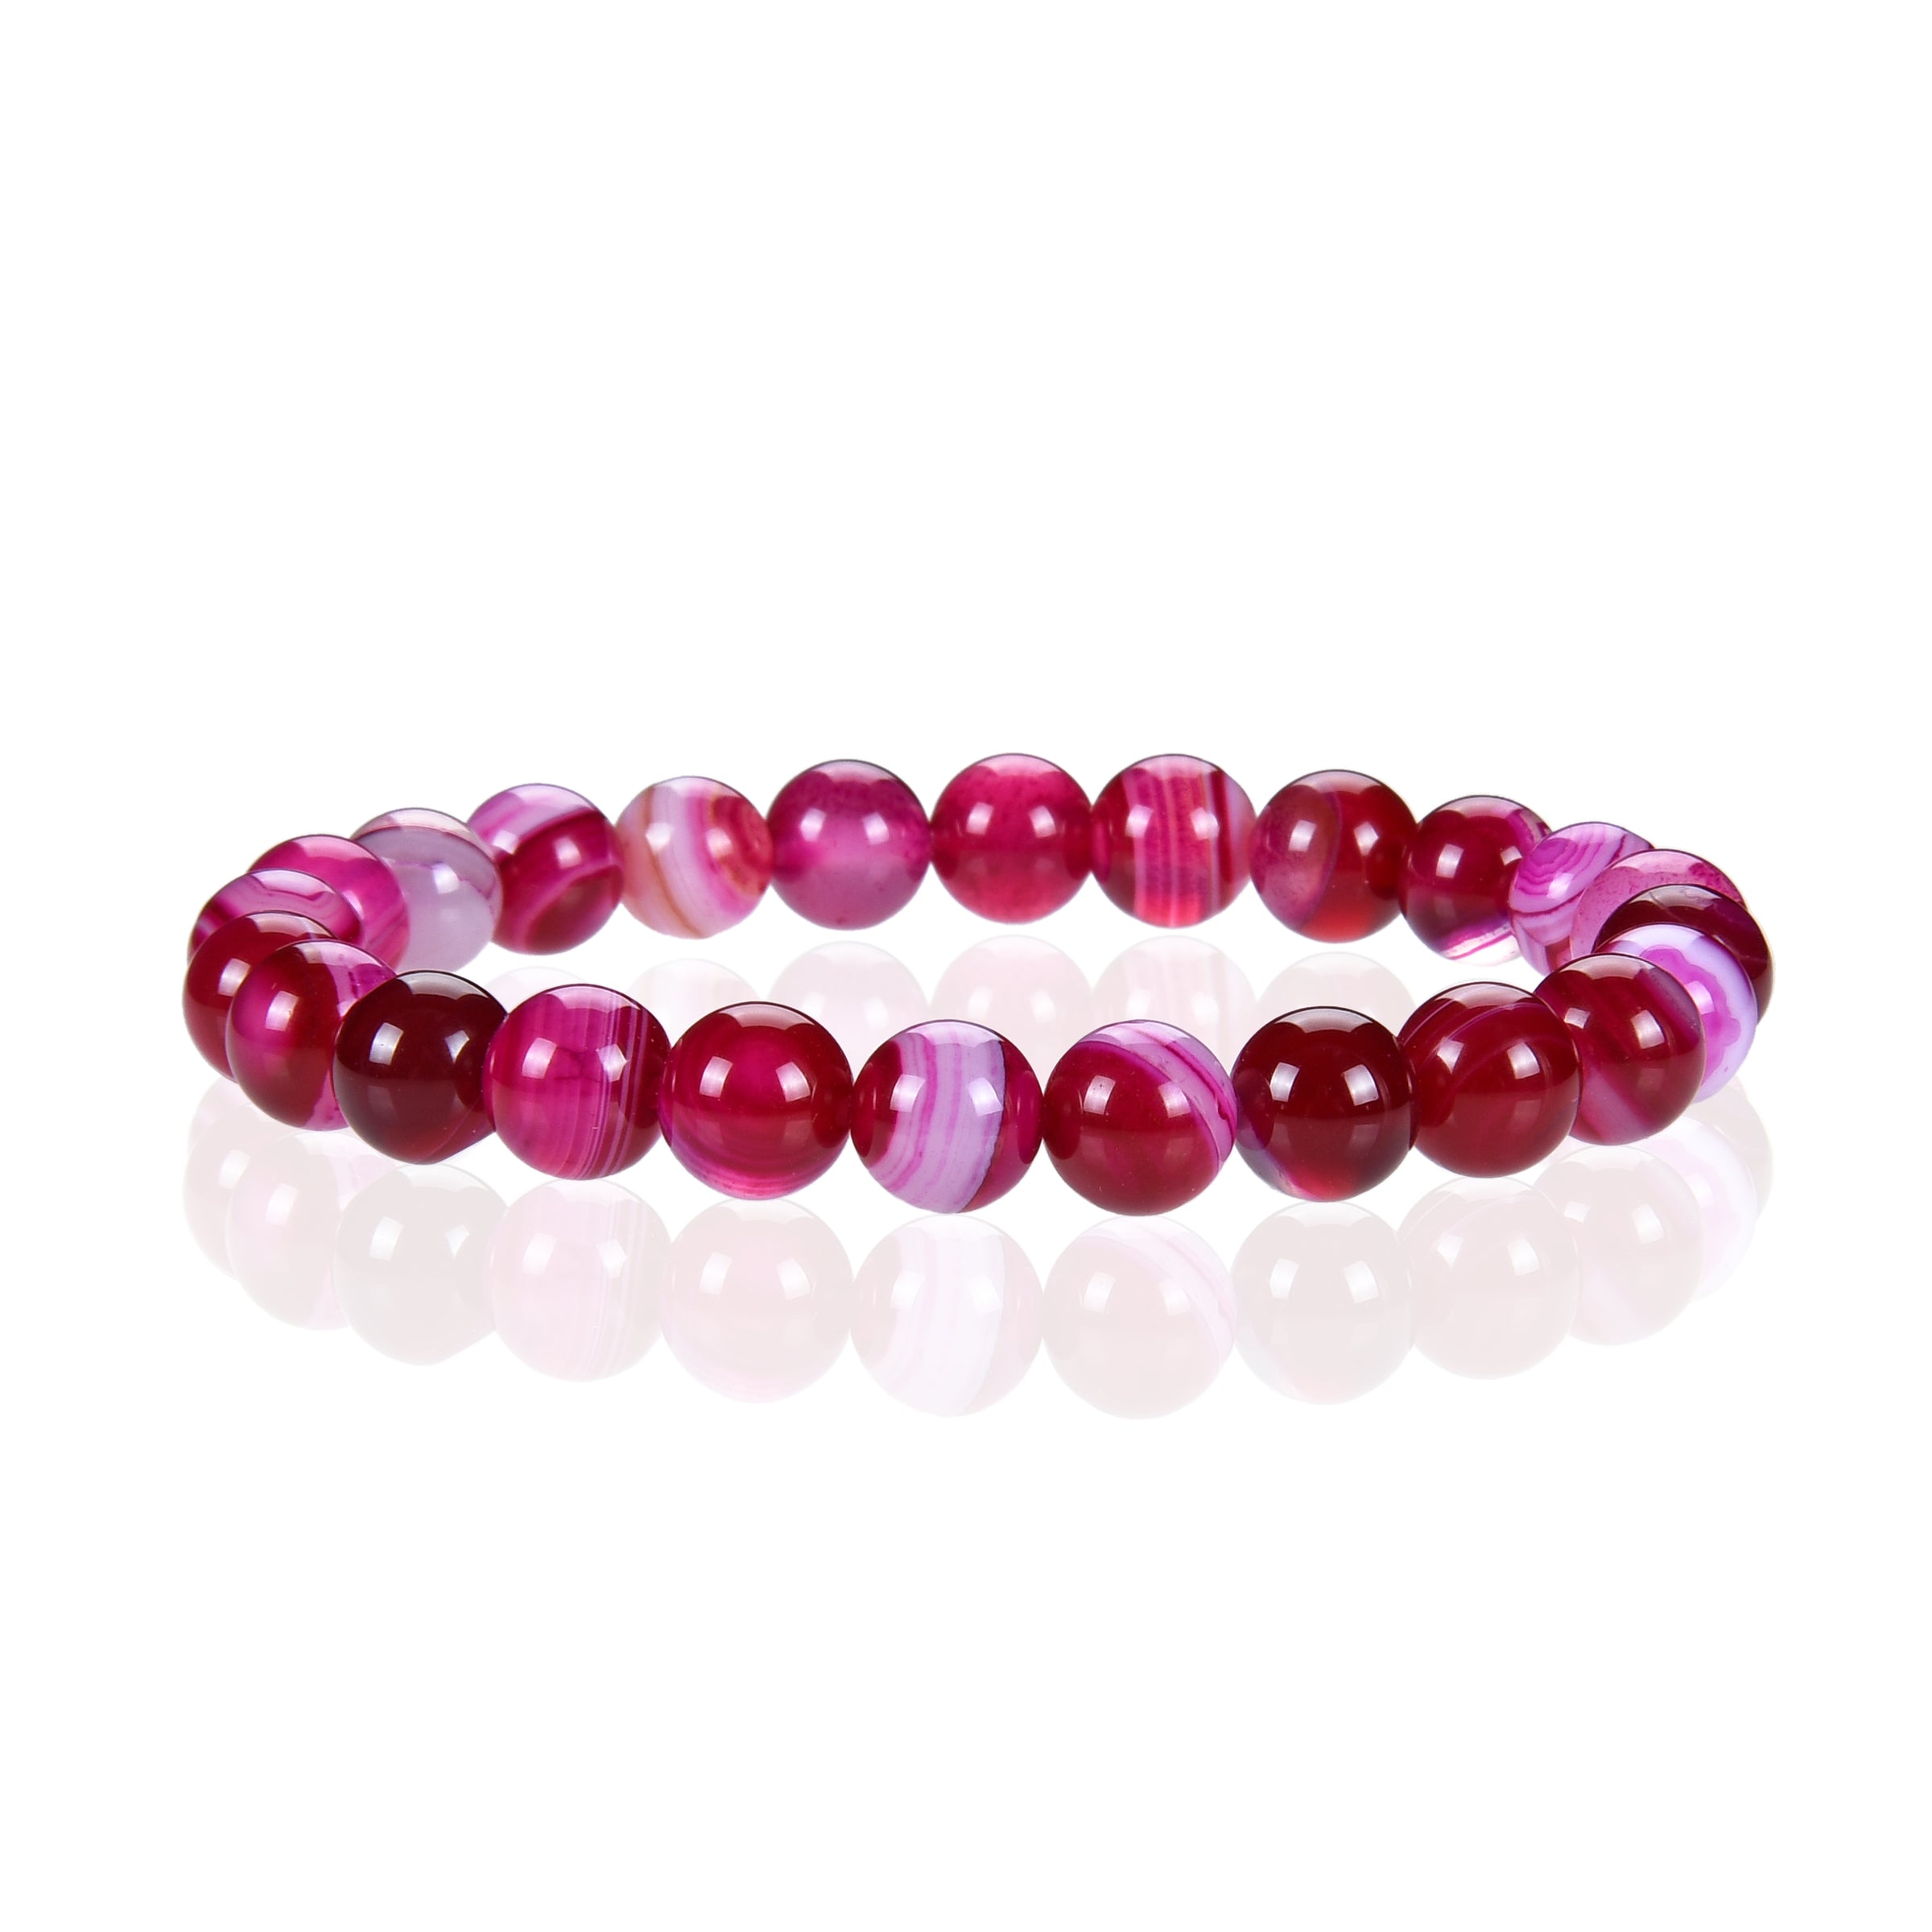 Stretch Bracelet | 8mm Beads (Lace Agate -Fuchsia/Pink)